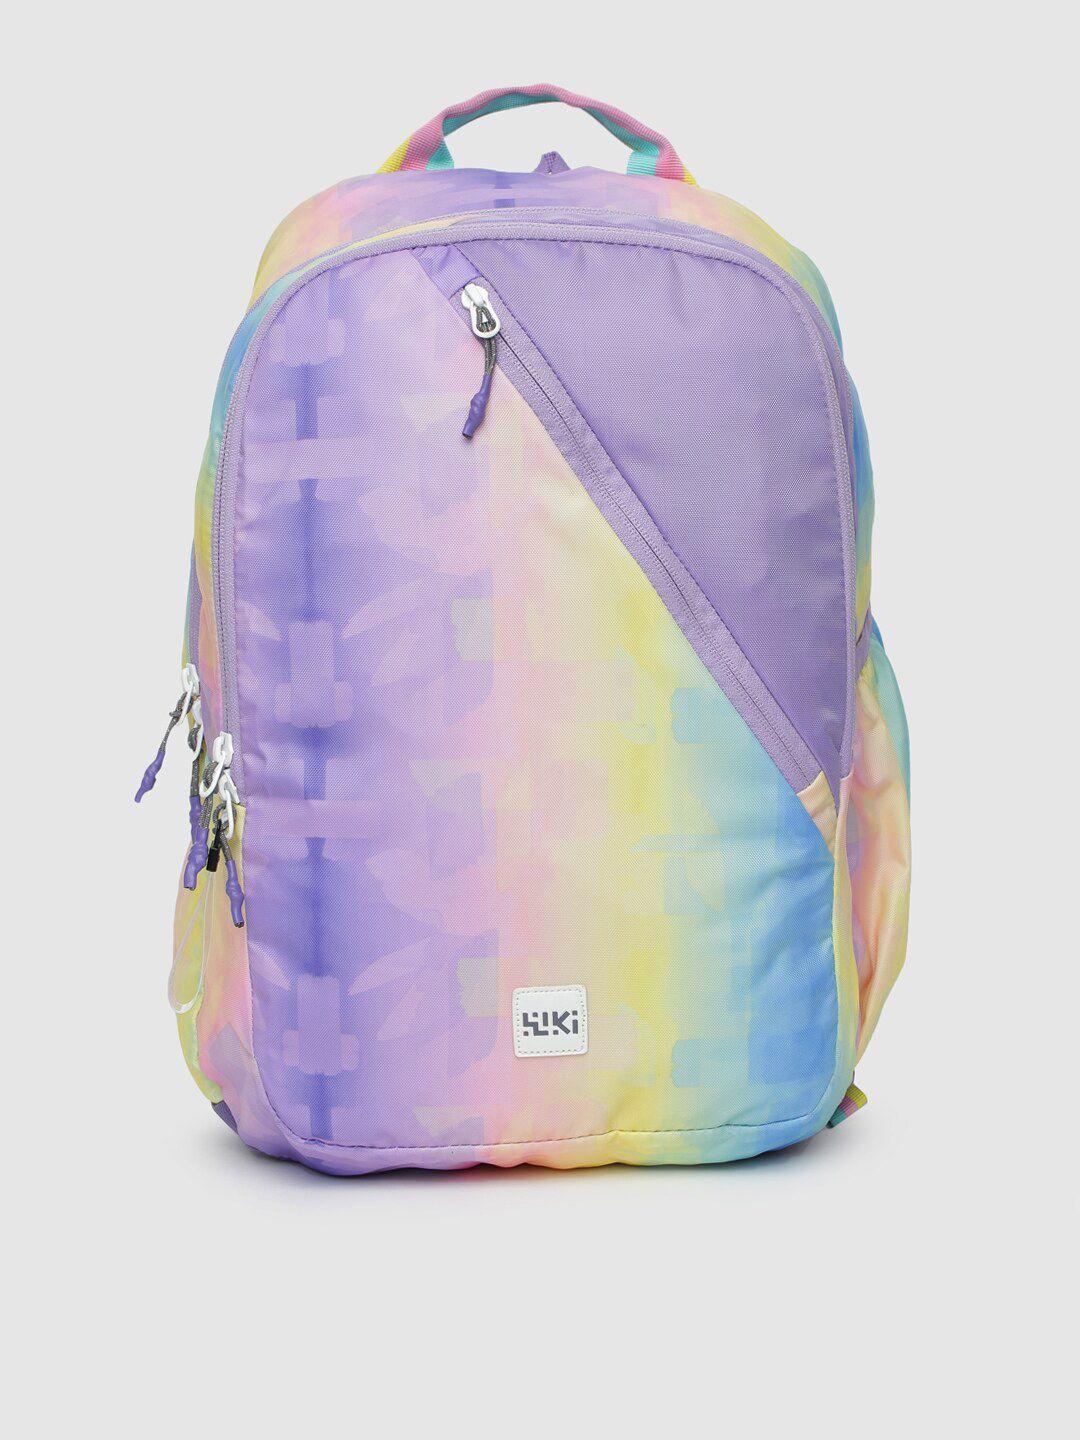 wildcraft-unisex-yellow-&-purple-backpack